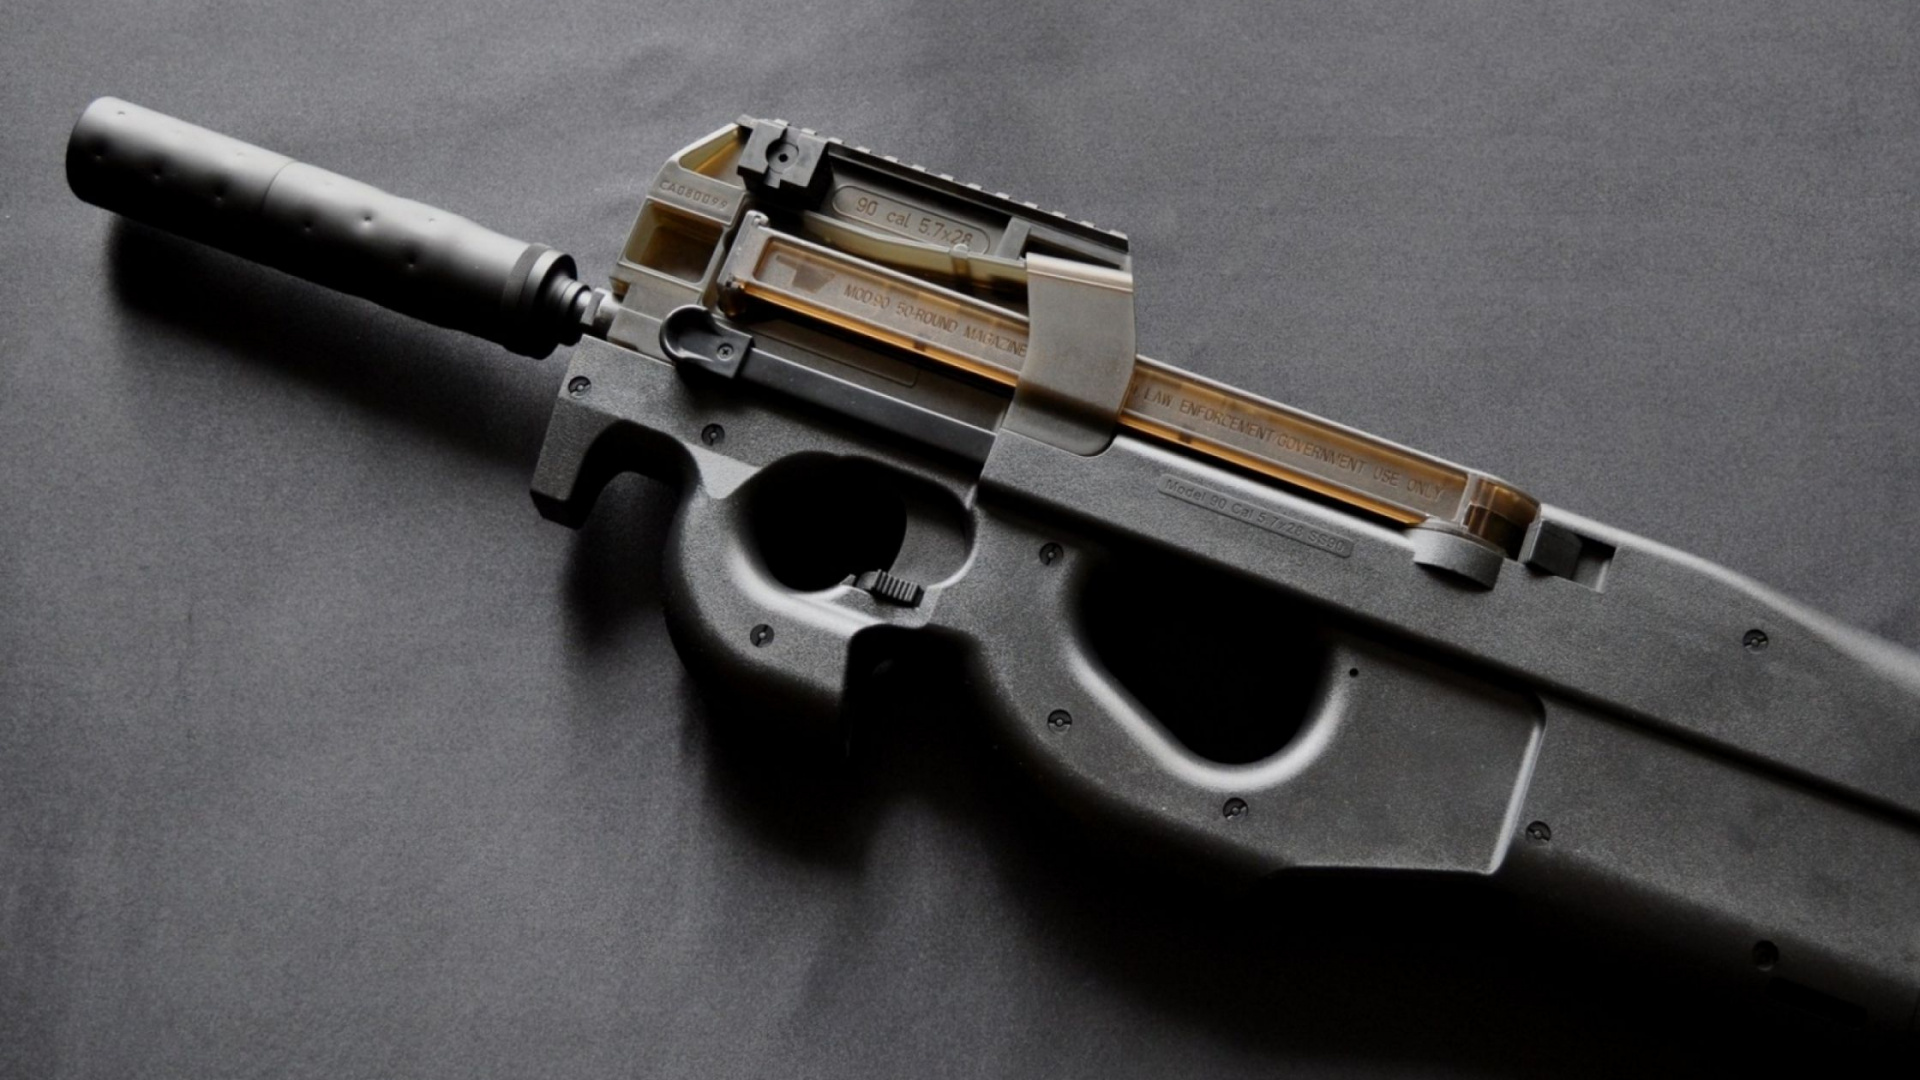 Submachine Gun, fn Herstal, Arma, Gatillo, Revolver. Wallpaper in 1920x1080 Resolution